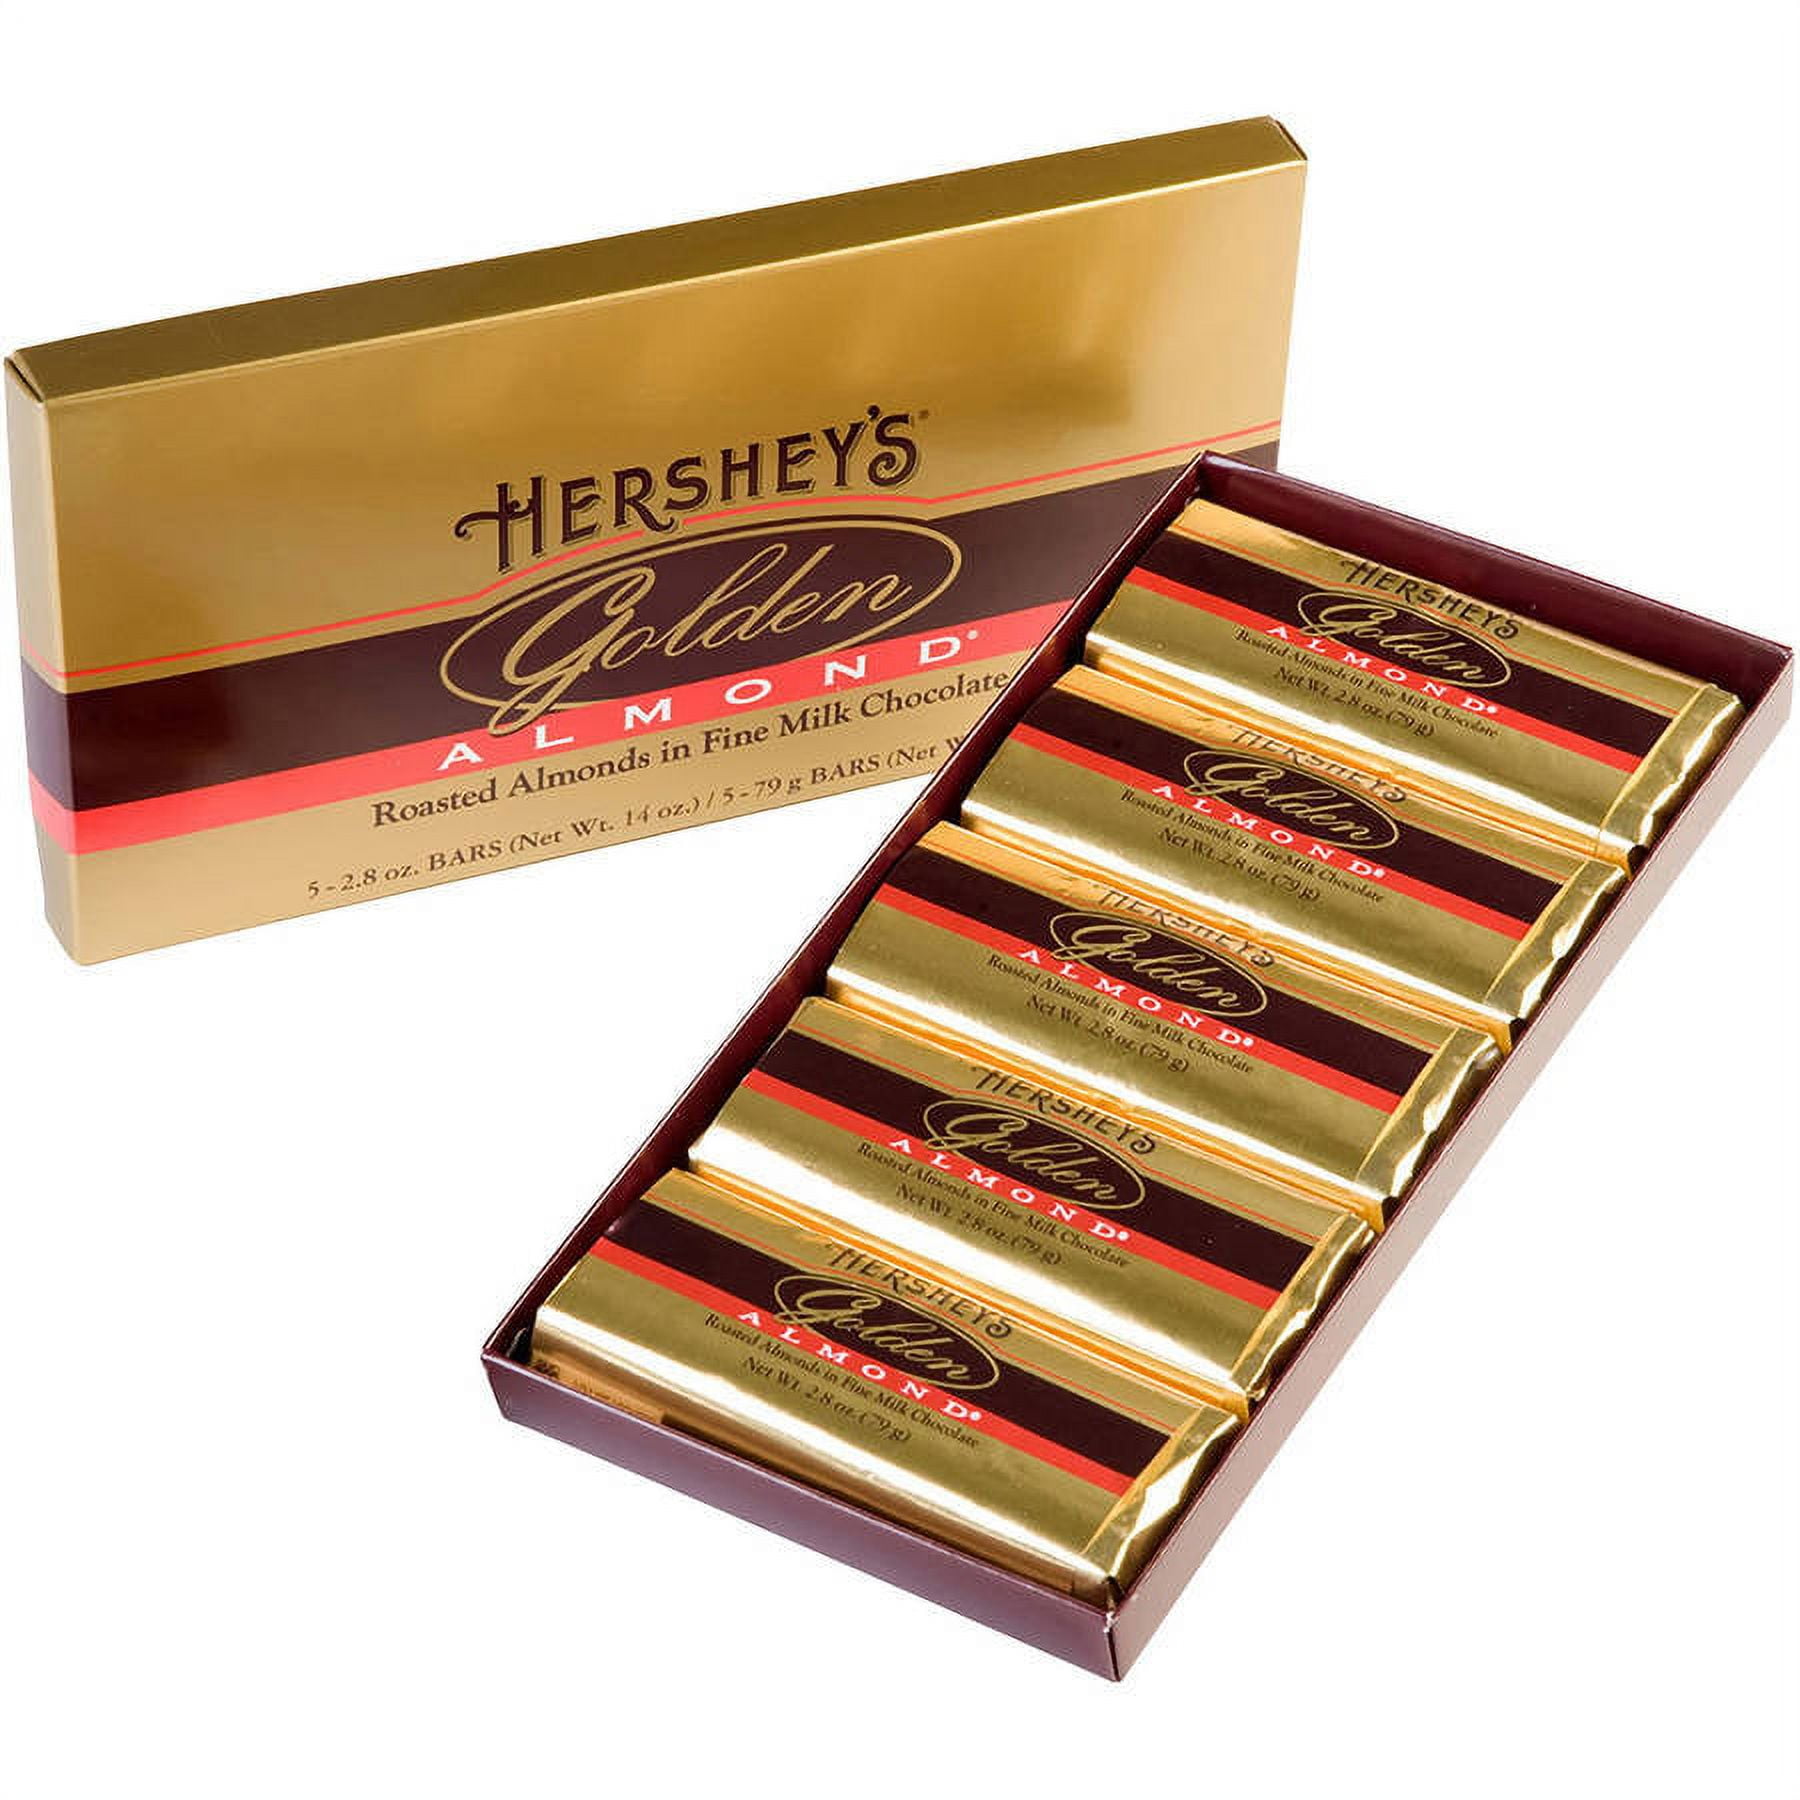 Hershey's Golden Almond Chocolate Bar Gift Box, 5 Count, 2.8 oz Bars -  Macy's